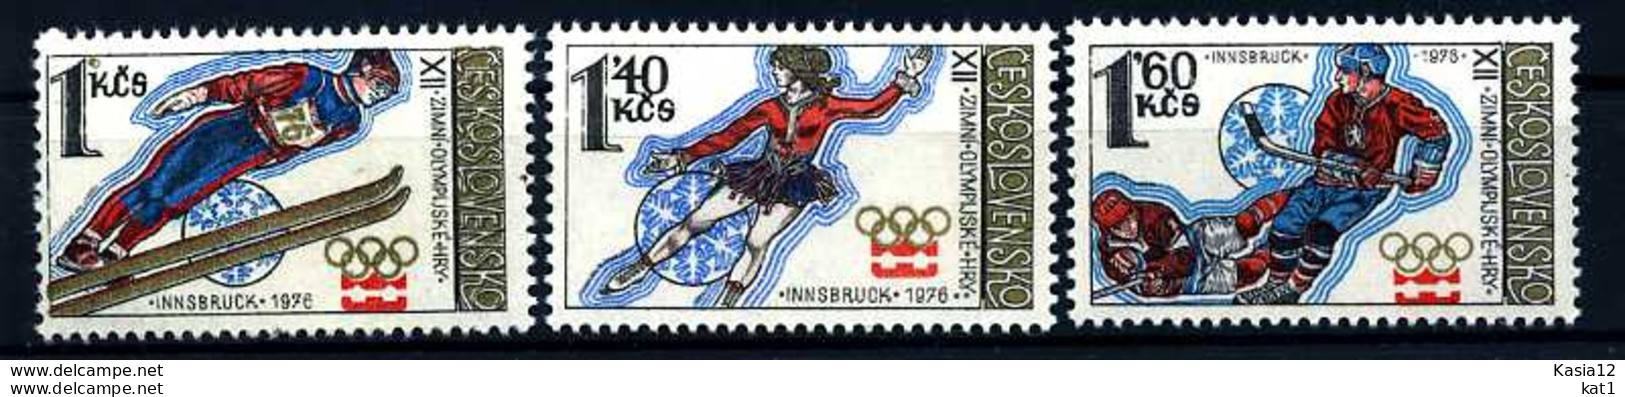 E09089)Olympia 76 CSSR 2305/7** - Hiver 1976: Innsbruck